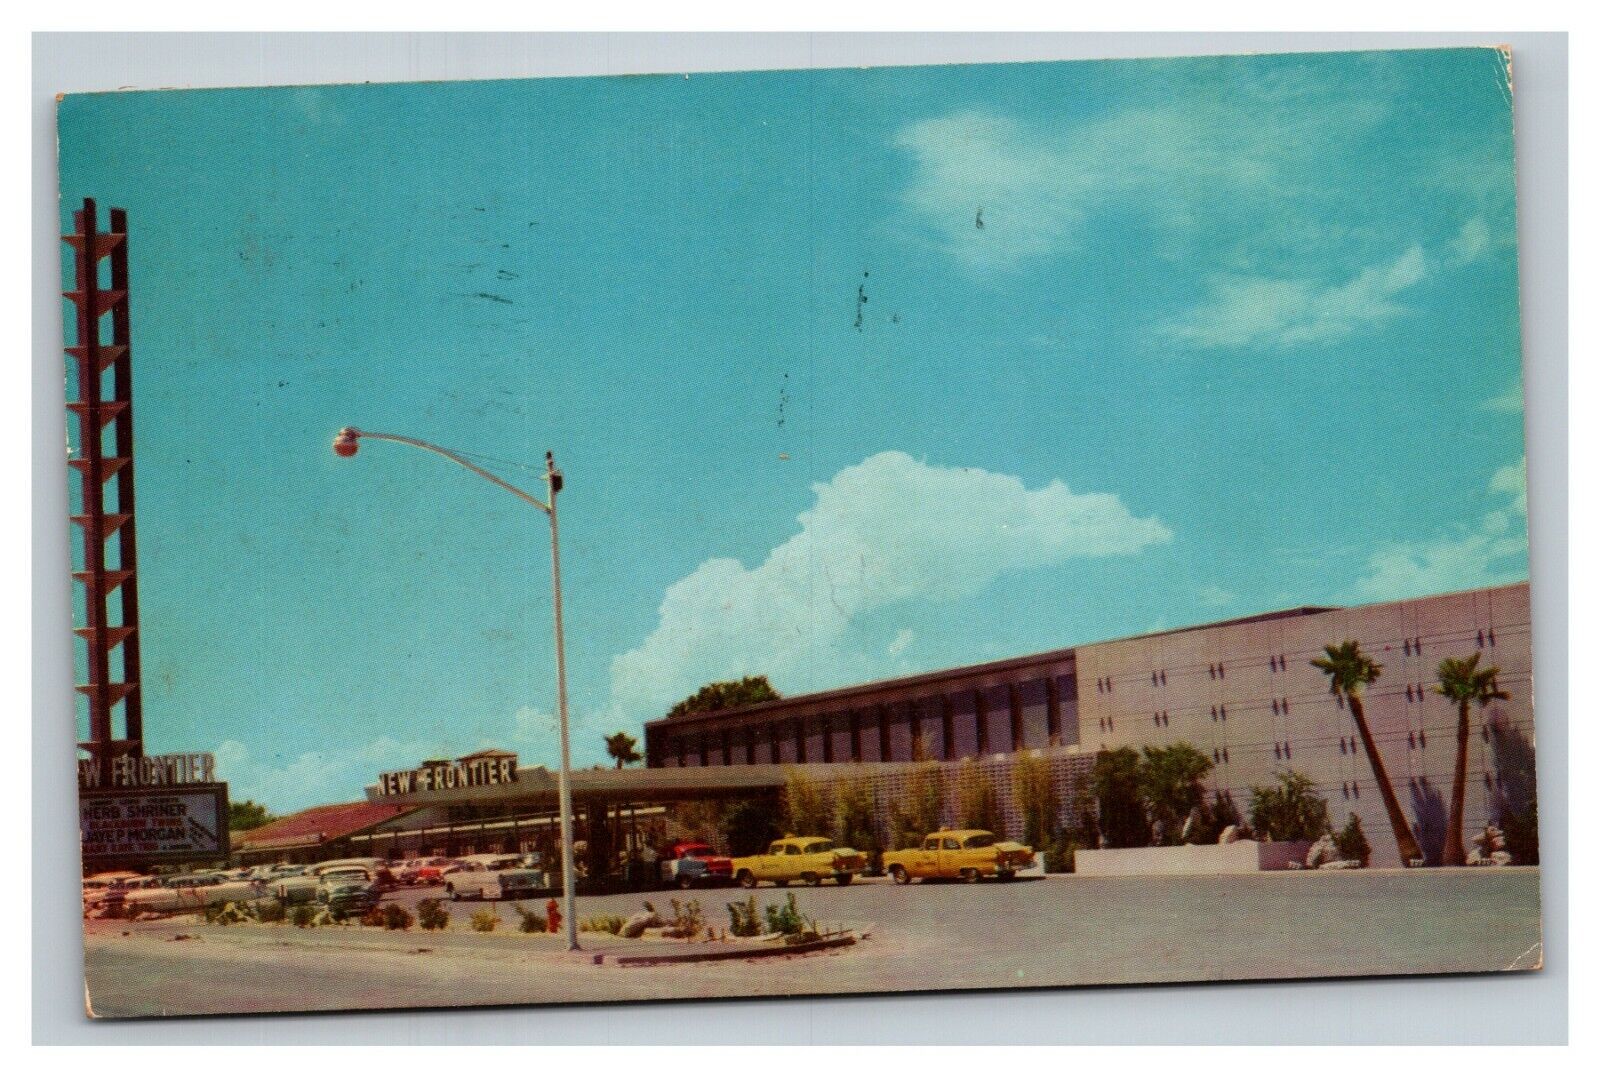 Vintage 1954 Postcard - Hotel Casino New Frontier Las Vegas Nevada - Old Taxis